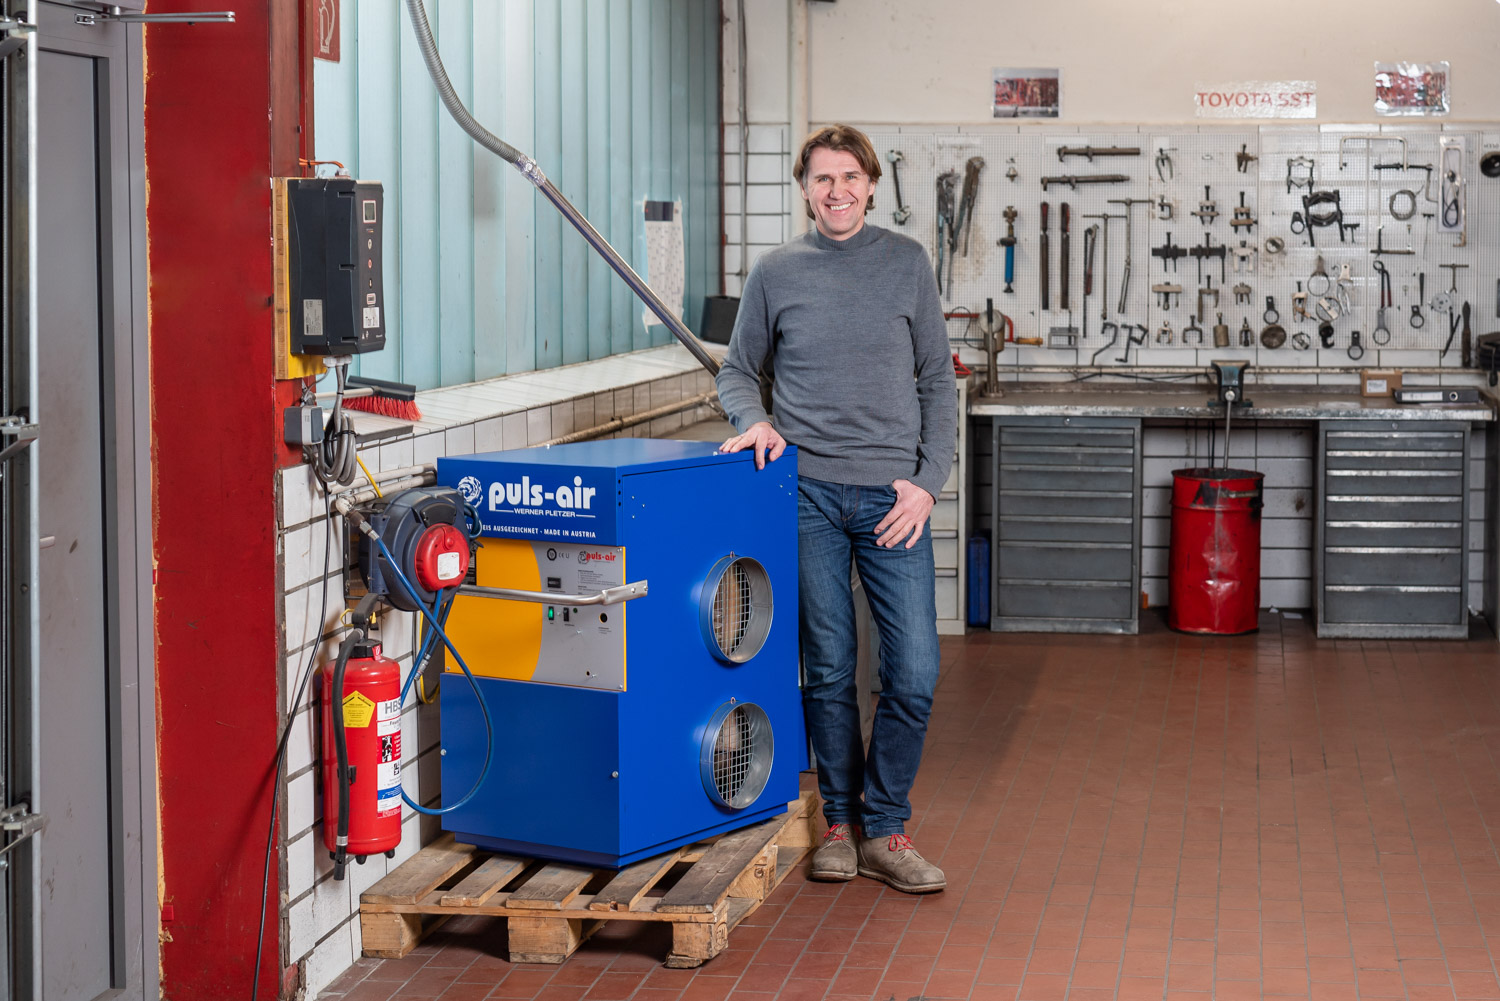 Herbert Schinagl Managing Director Autohaus Schinagl with Puls-air heater